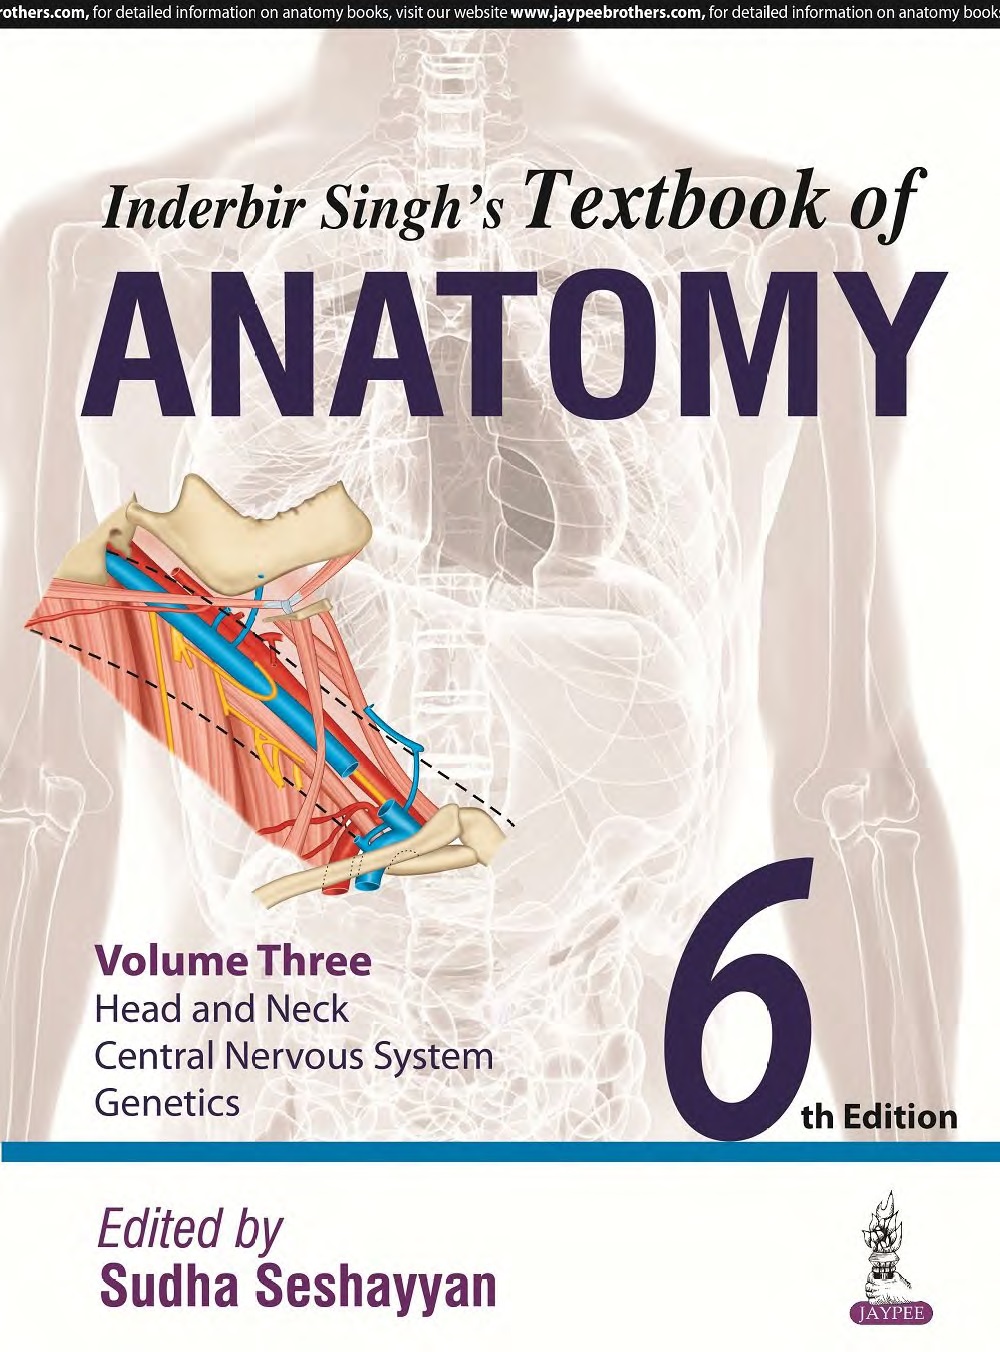 Inderbir Singh’s textbook of Anatomy Volume Three sixth edition pdf book free download